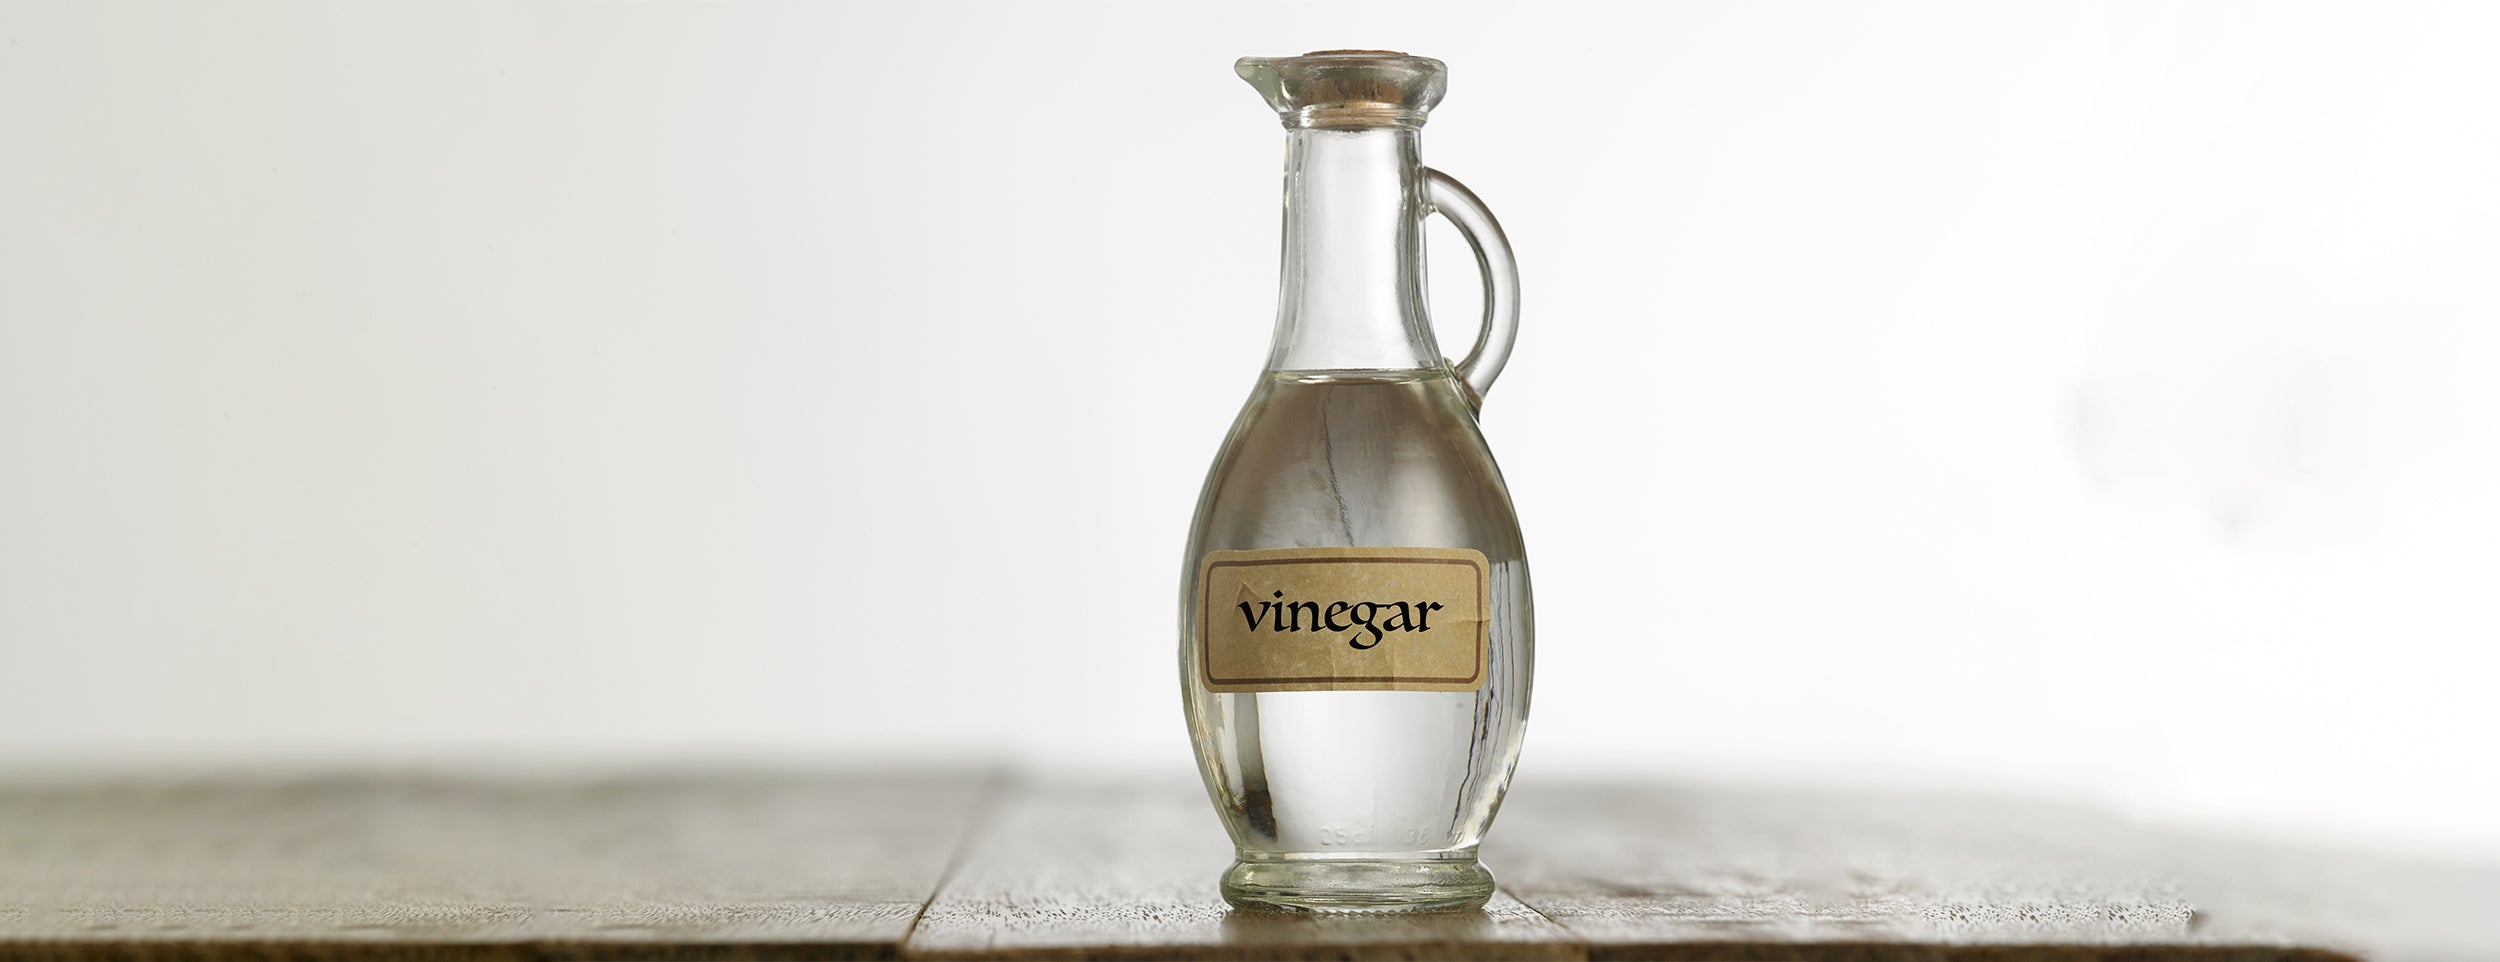 Alternative Remedies for Minor Burns with Vinegar